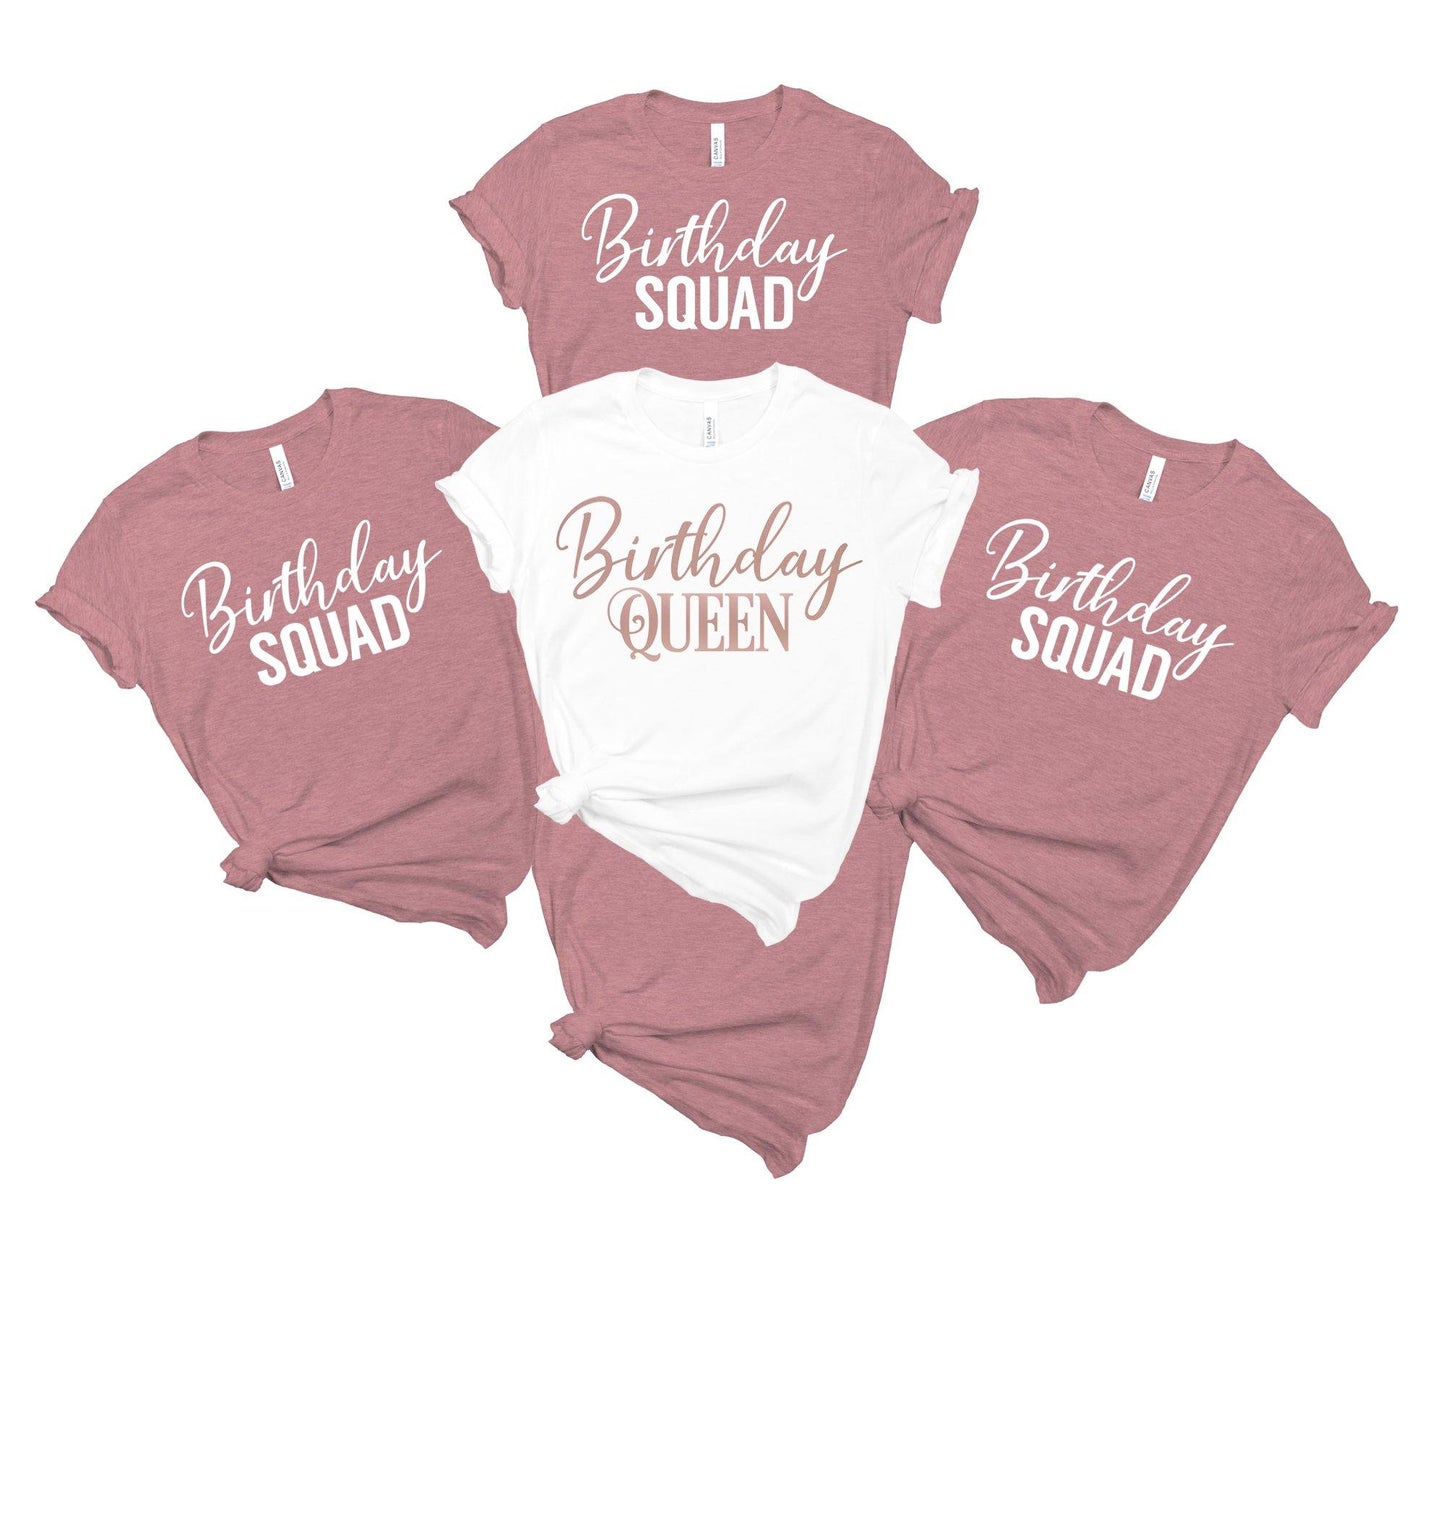 Birthday Queen / Birthday Squad - Women's Birthday Shirts - Healthy Wealthy Skinny